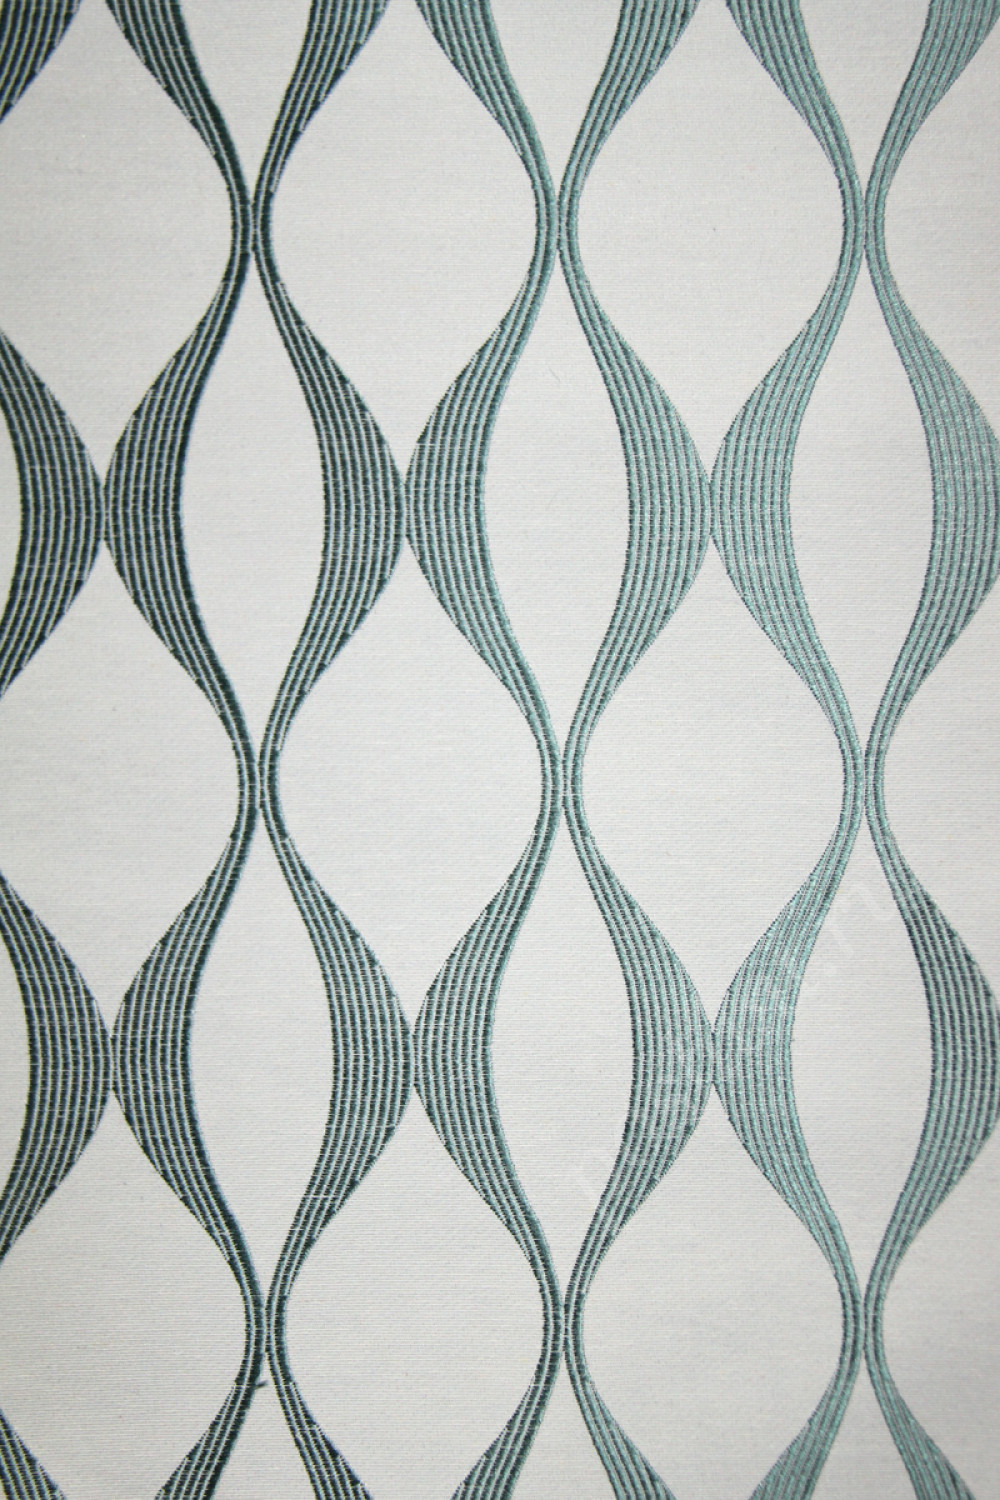 Ткань для штор SUNRUSE UDAIPUR синий геометрический узор на белом фоне (раппорт 9х16см)